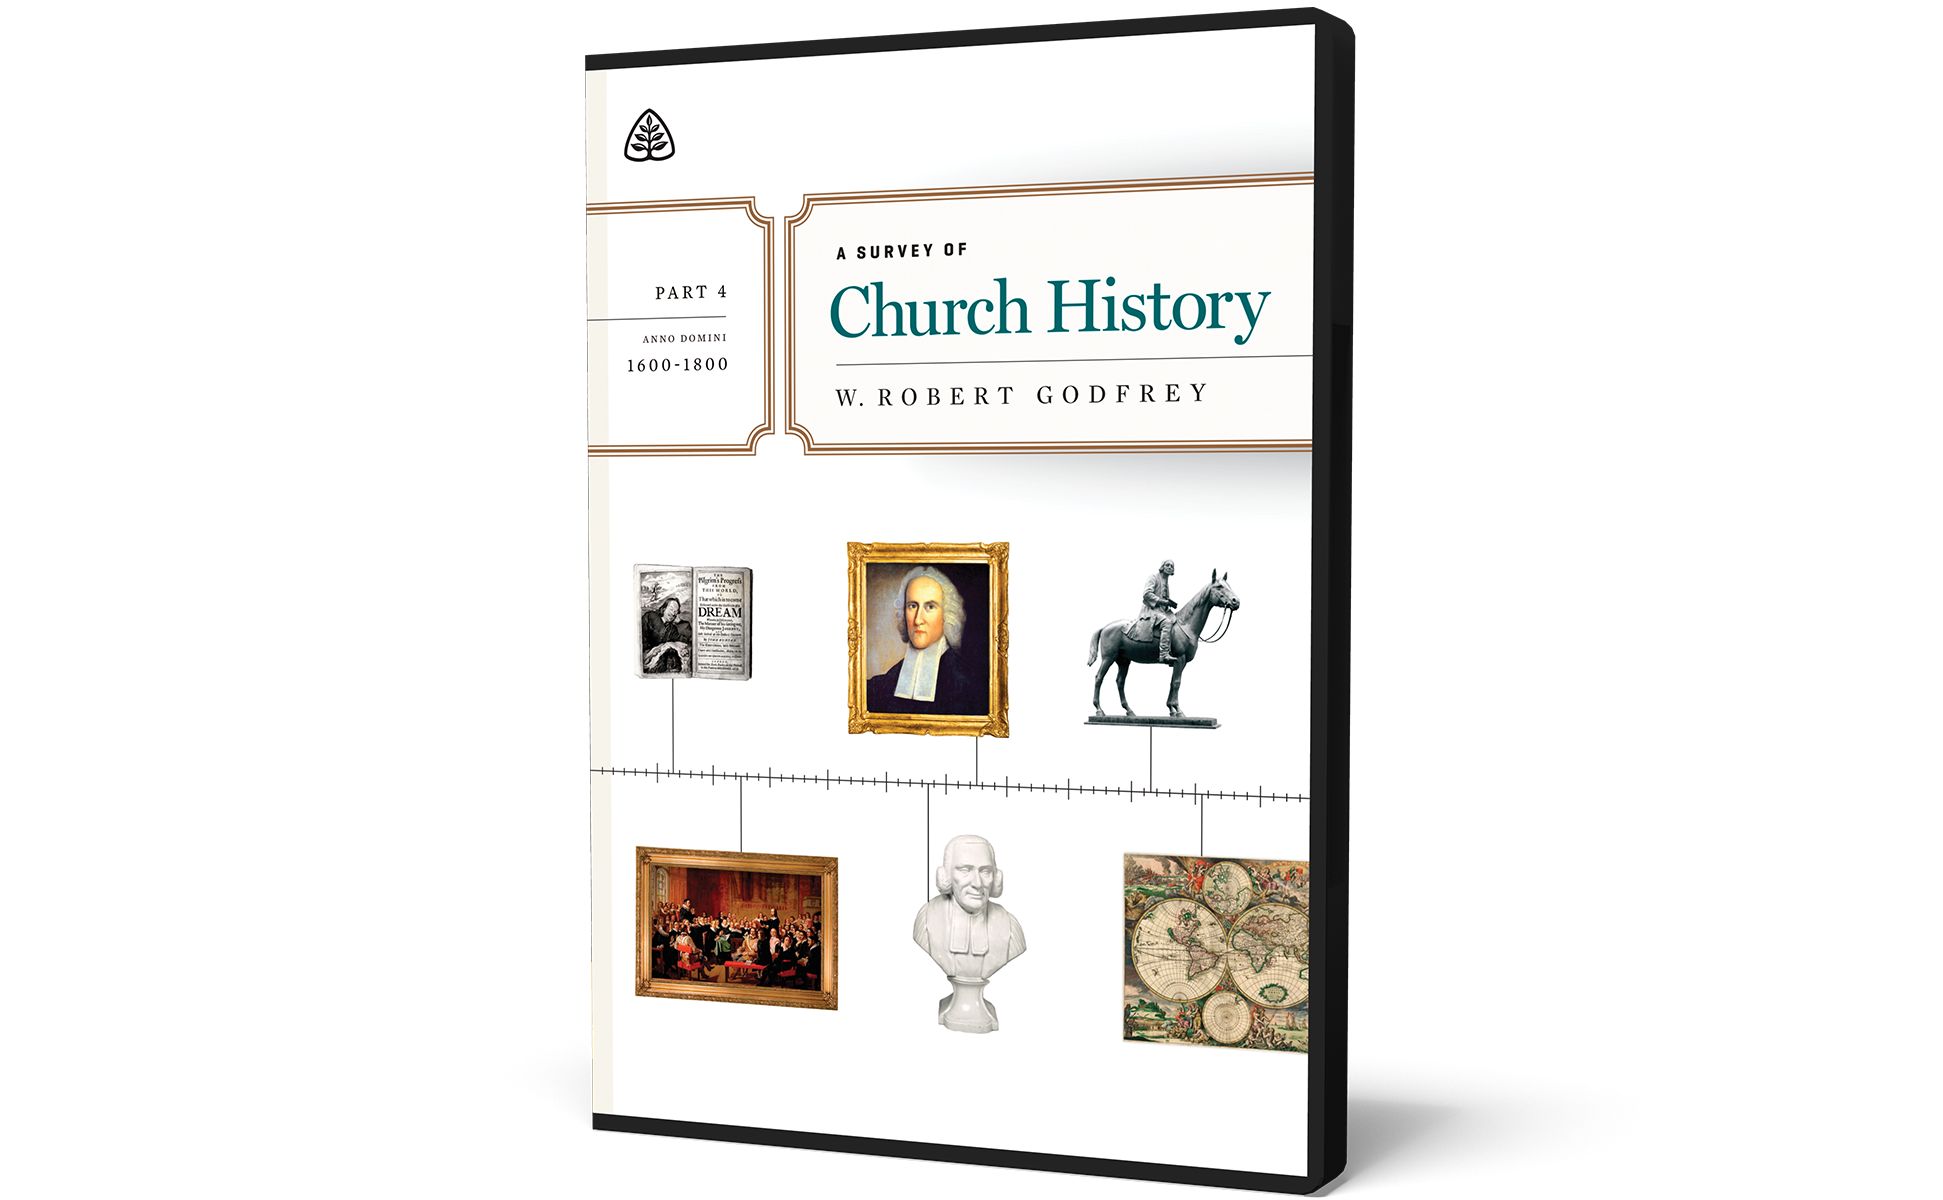 A Survey of Church History, Part 4 A.D. 1600-1800